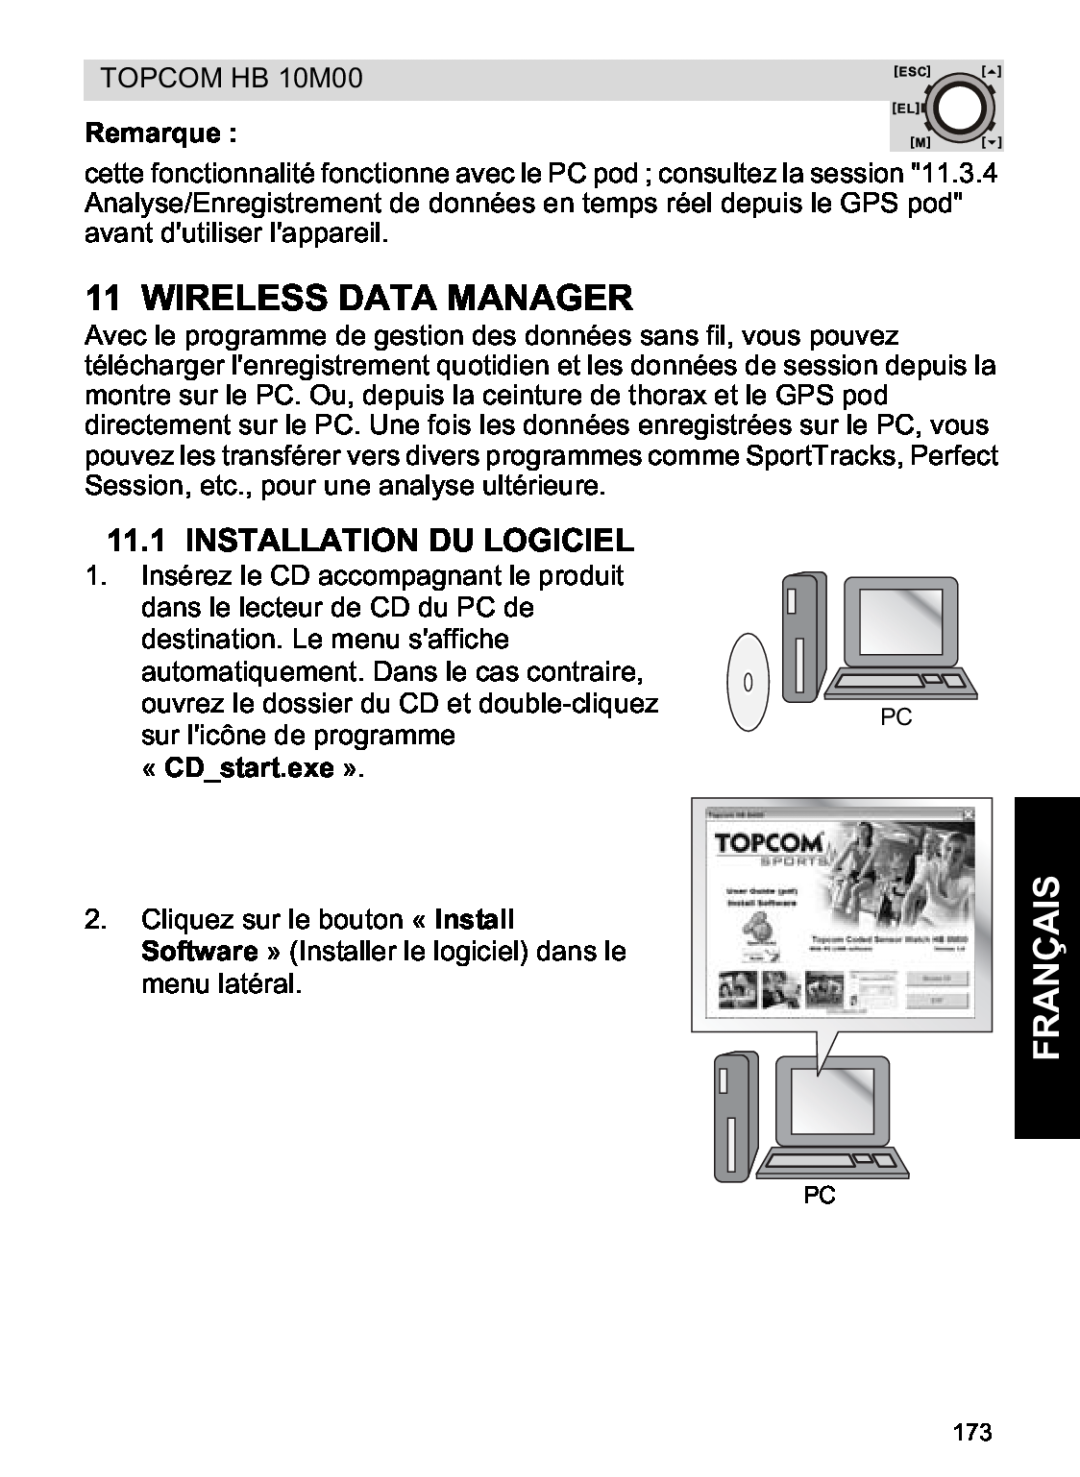 Topcom HB 10M00 manual Installation Du Logiciel, « CDstart.exe », Wireless Data Manager, Français, Remarque 